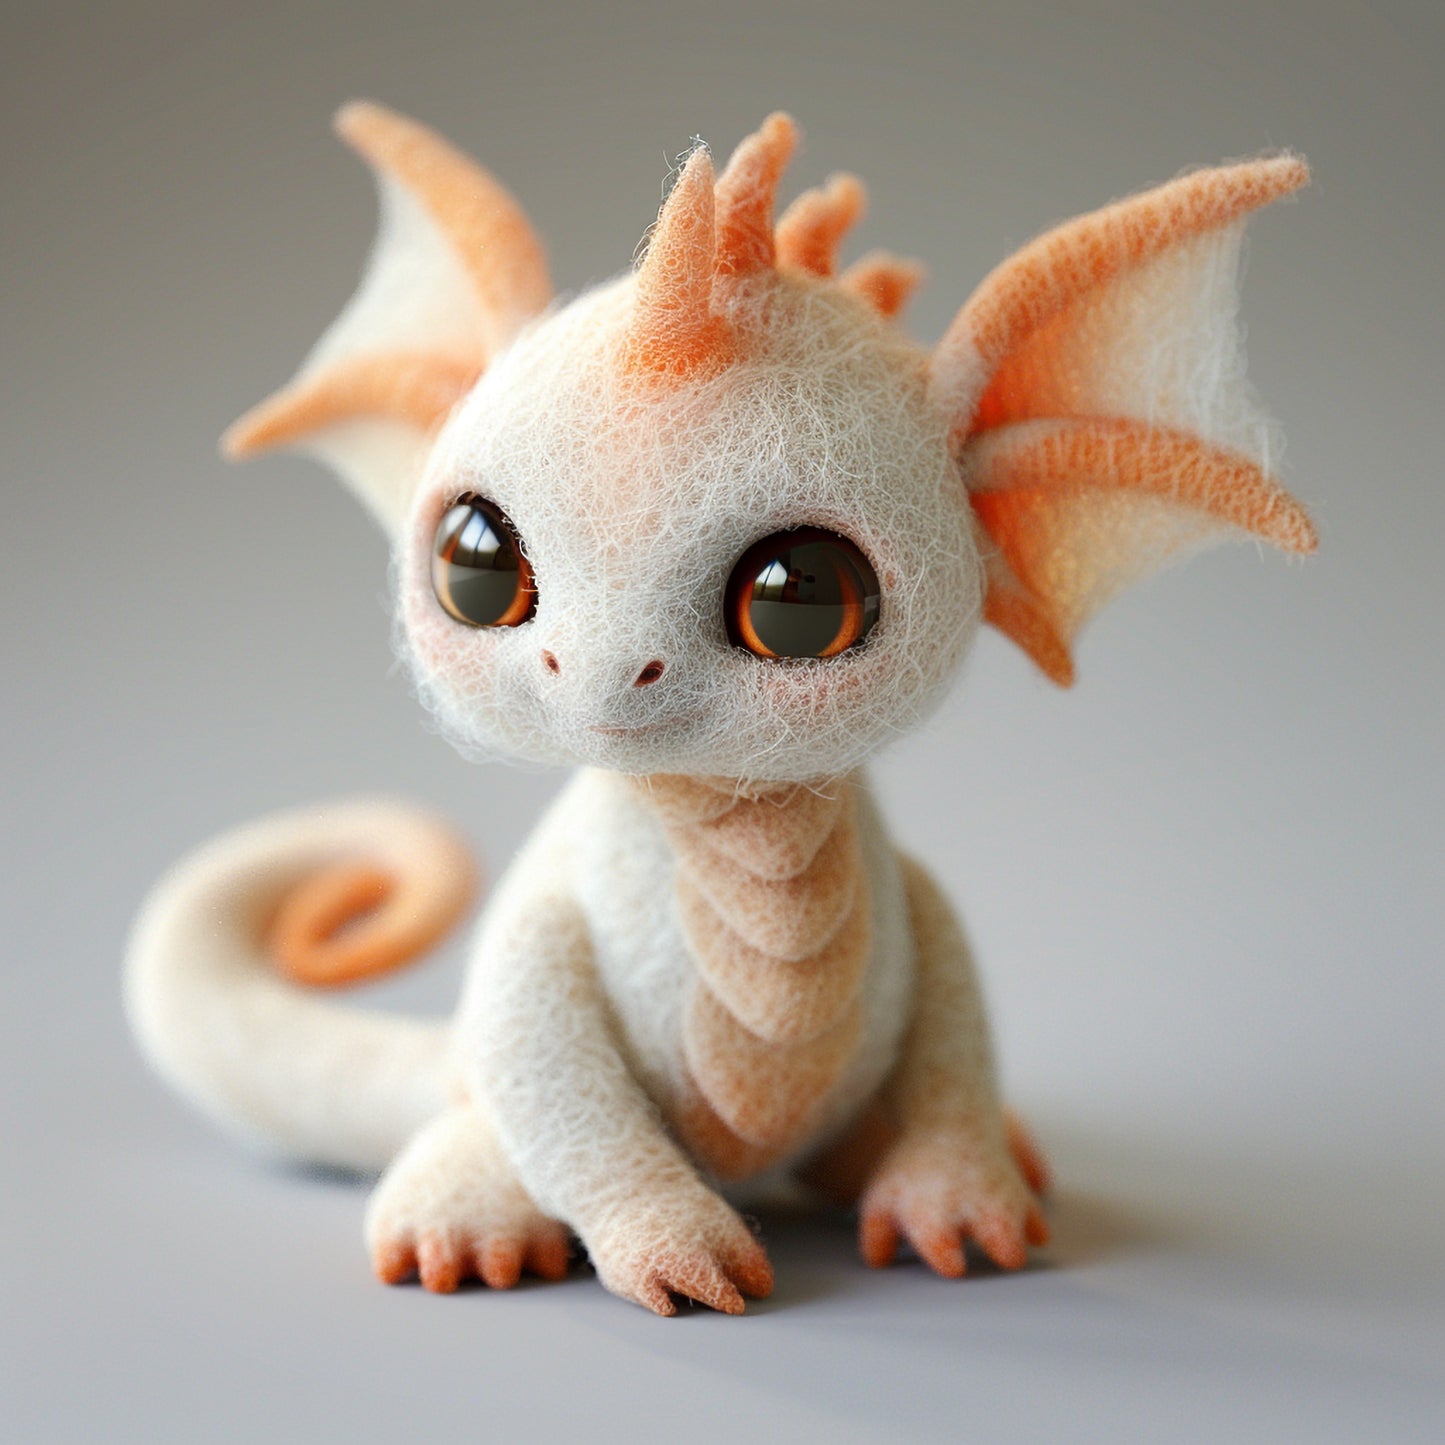 Adorable Handmade Dragon Figurine with Charming Eyes